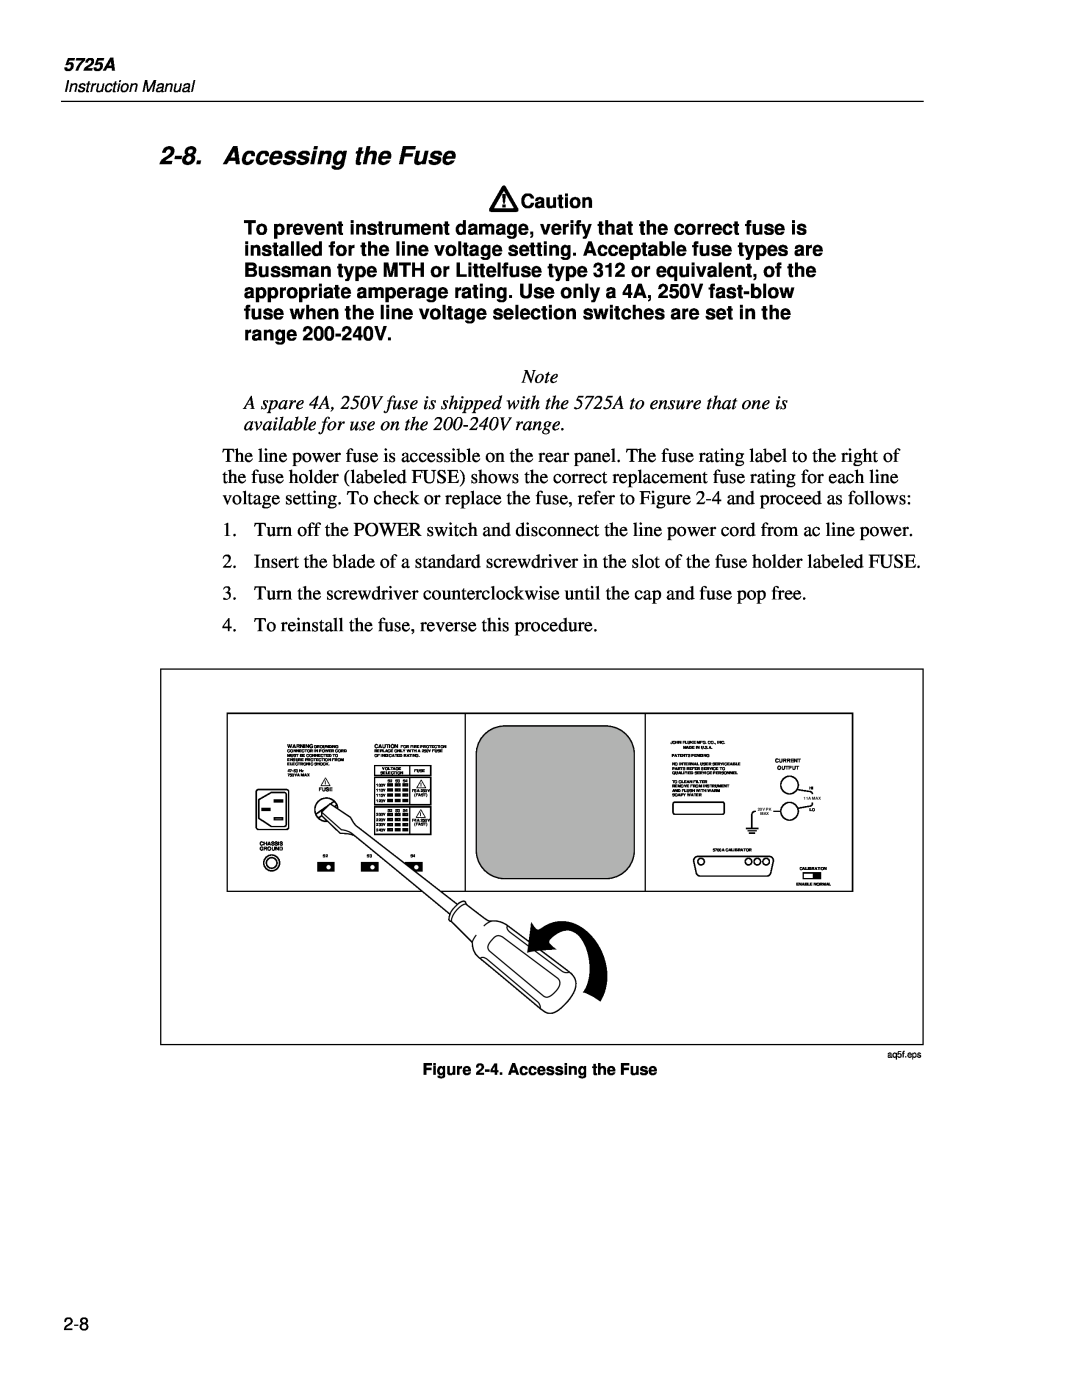 Fluke 5725A instruction manual Accessing the Fuse 